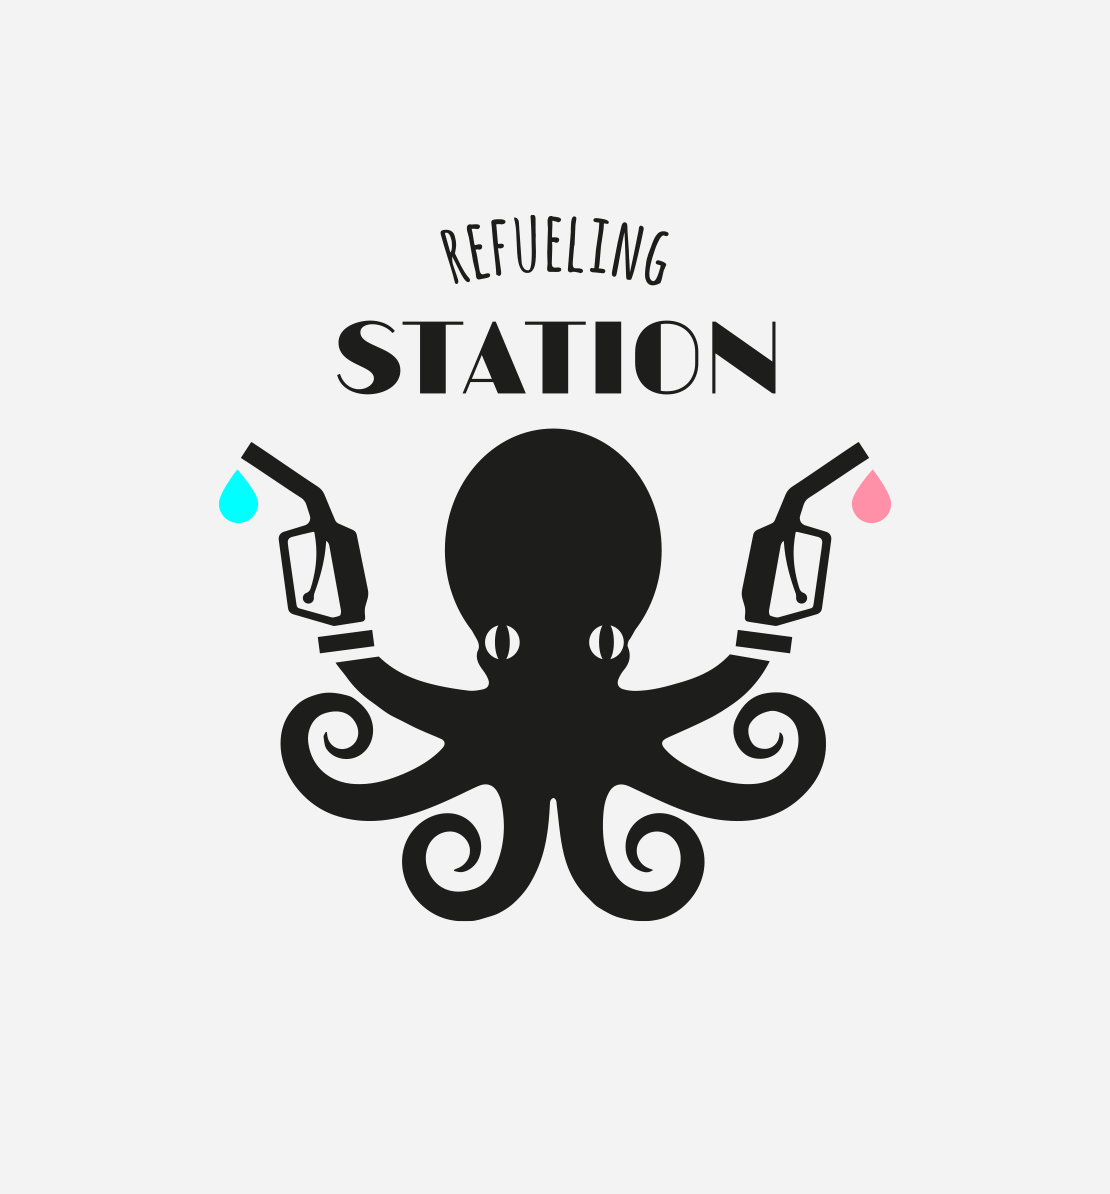 Refueling Station